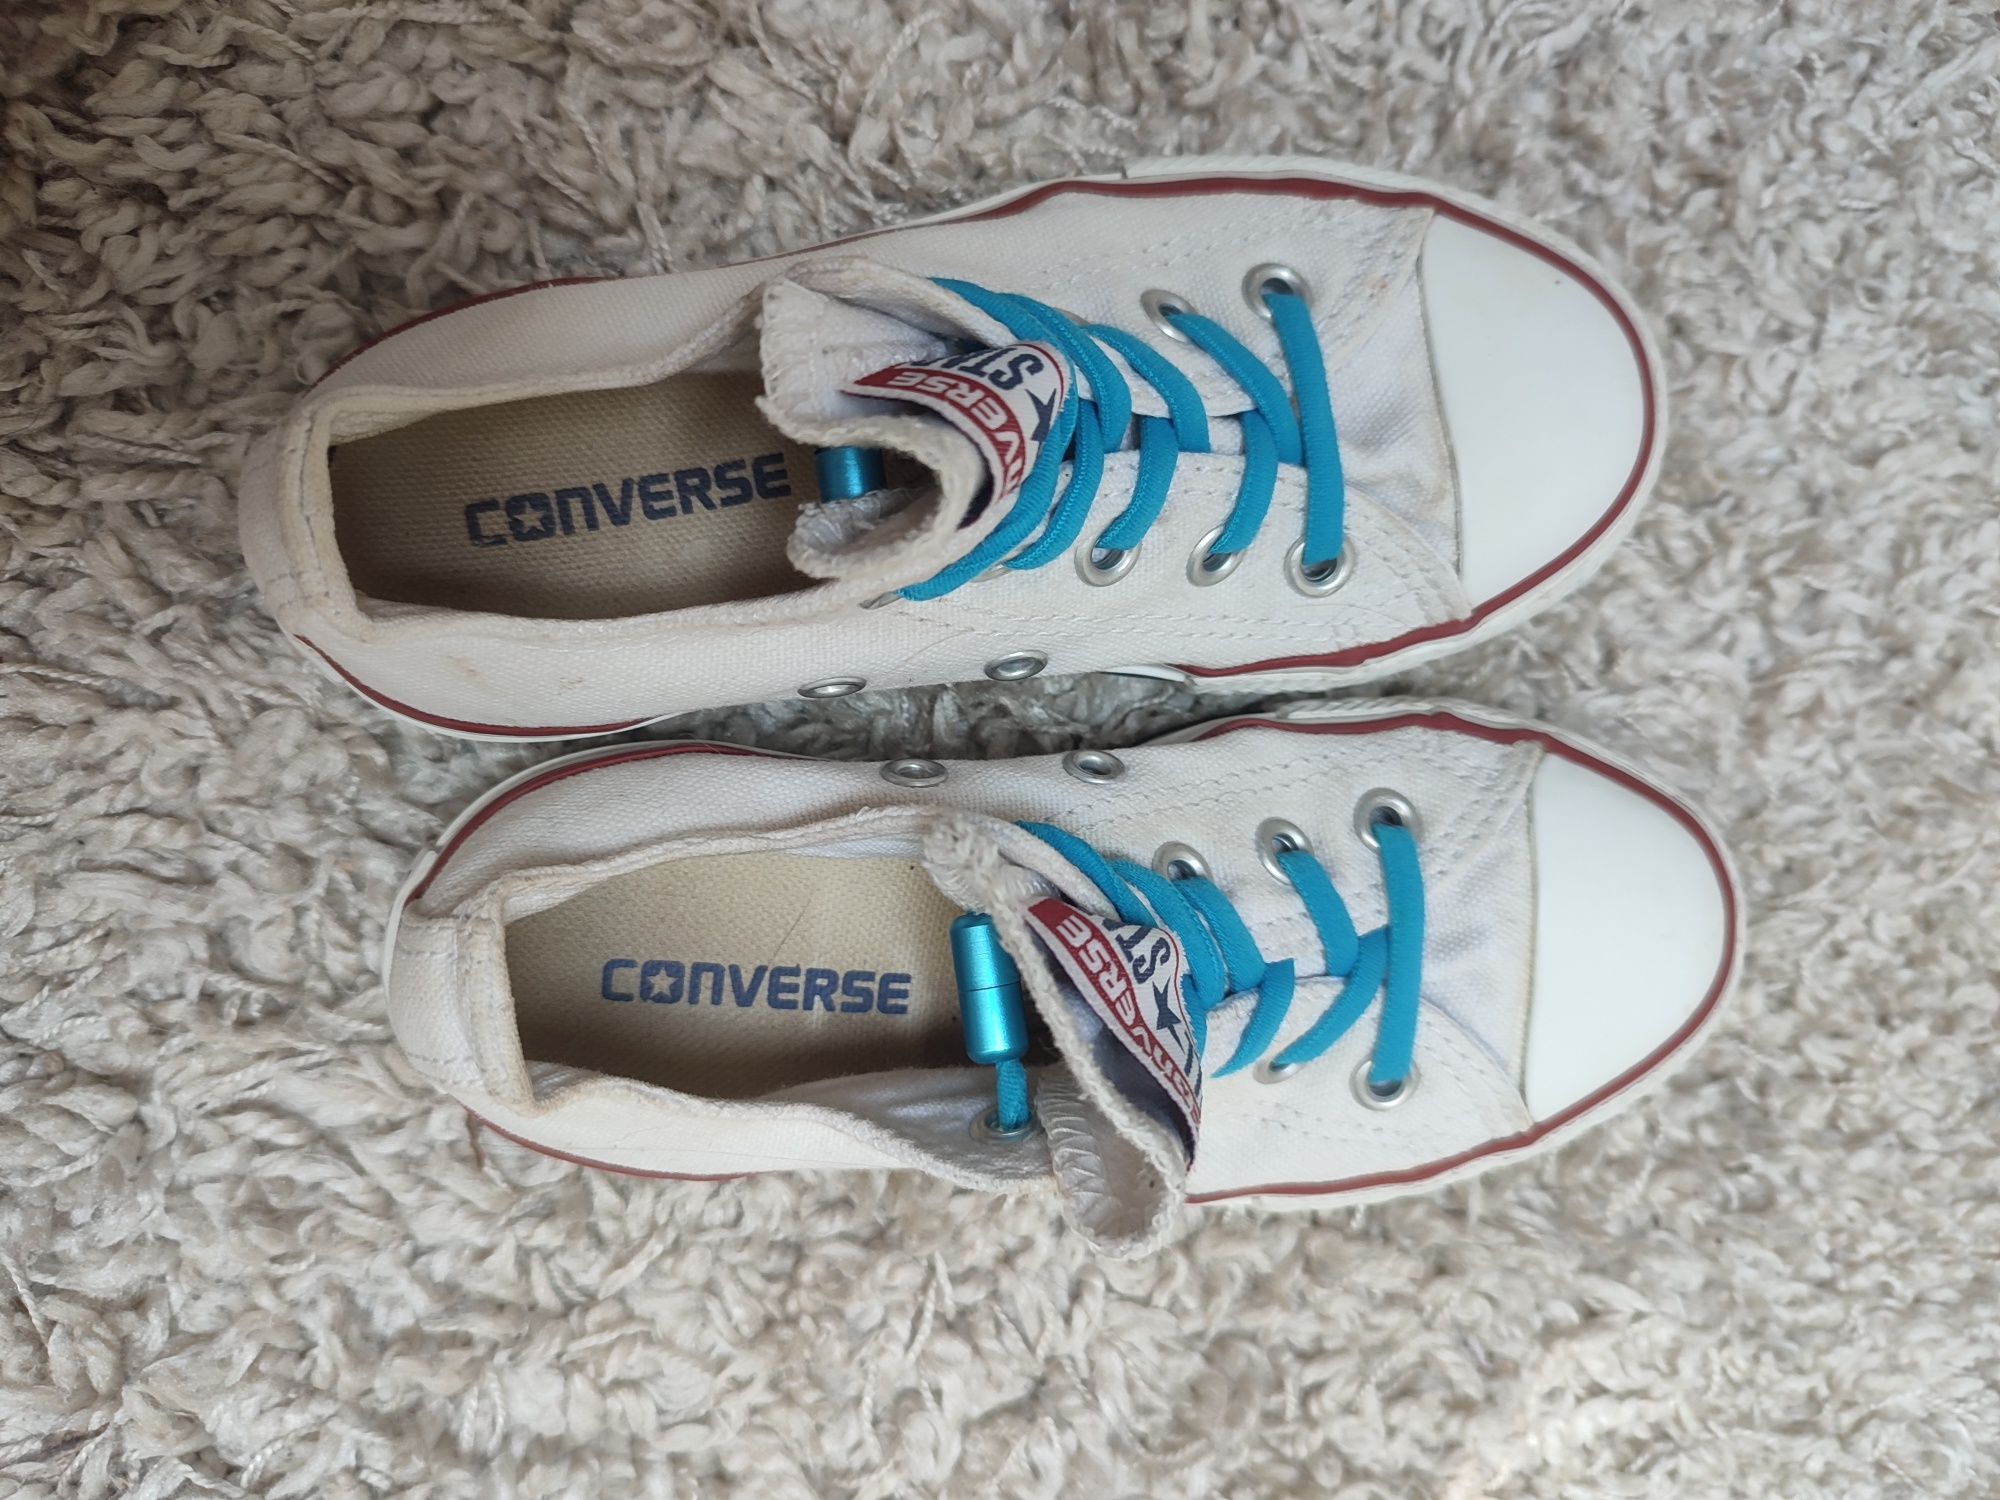 Trampki białe Converse rozmiar 27